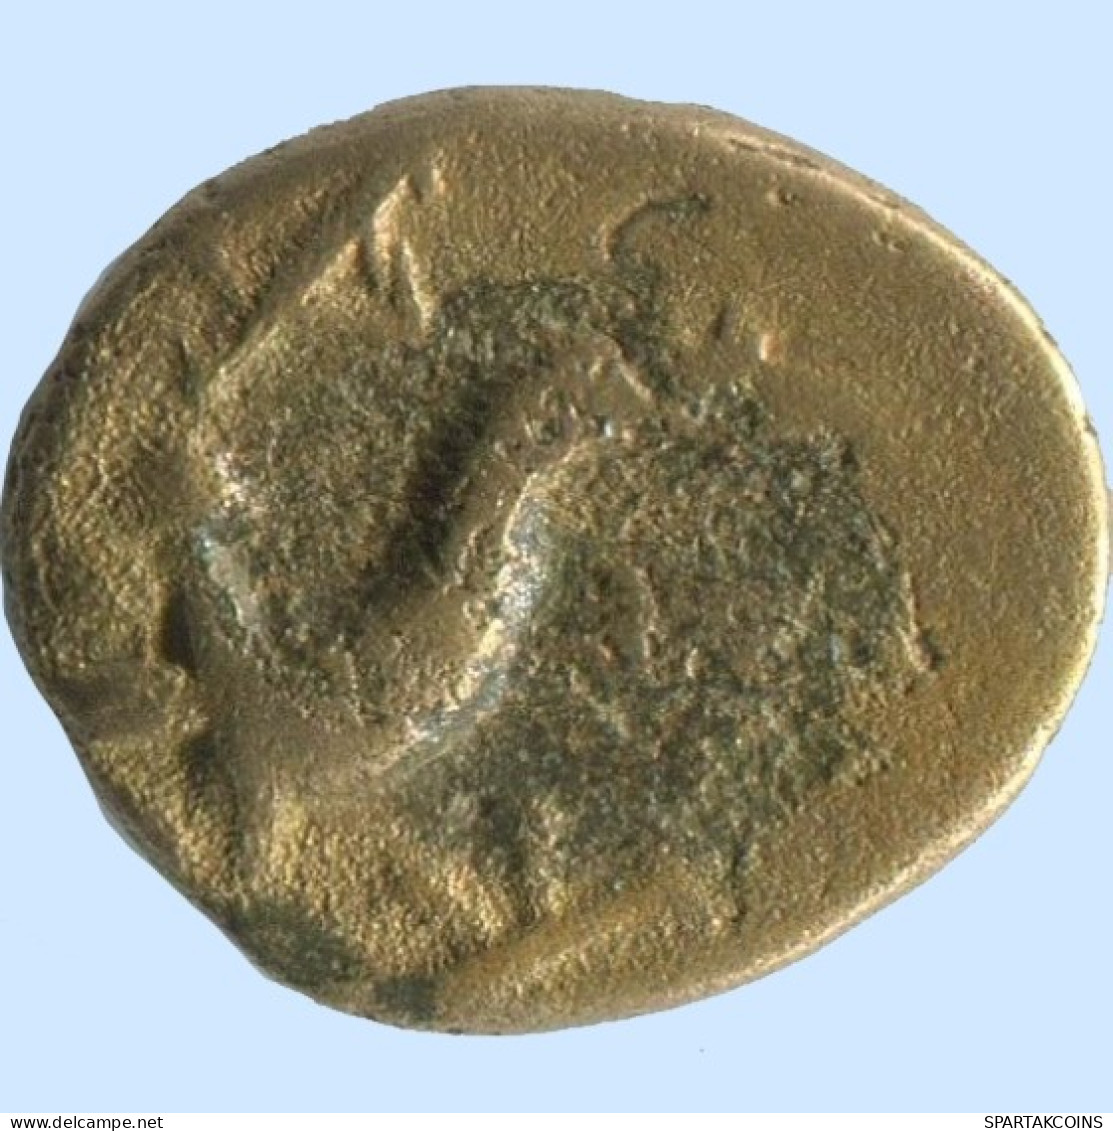 Alexander Cornucopia Bronze Antike GRIECHISCHE Münze 1g/11mm #ANT1710.10.D.A - Grecques